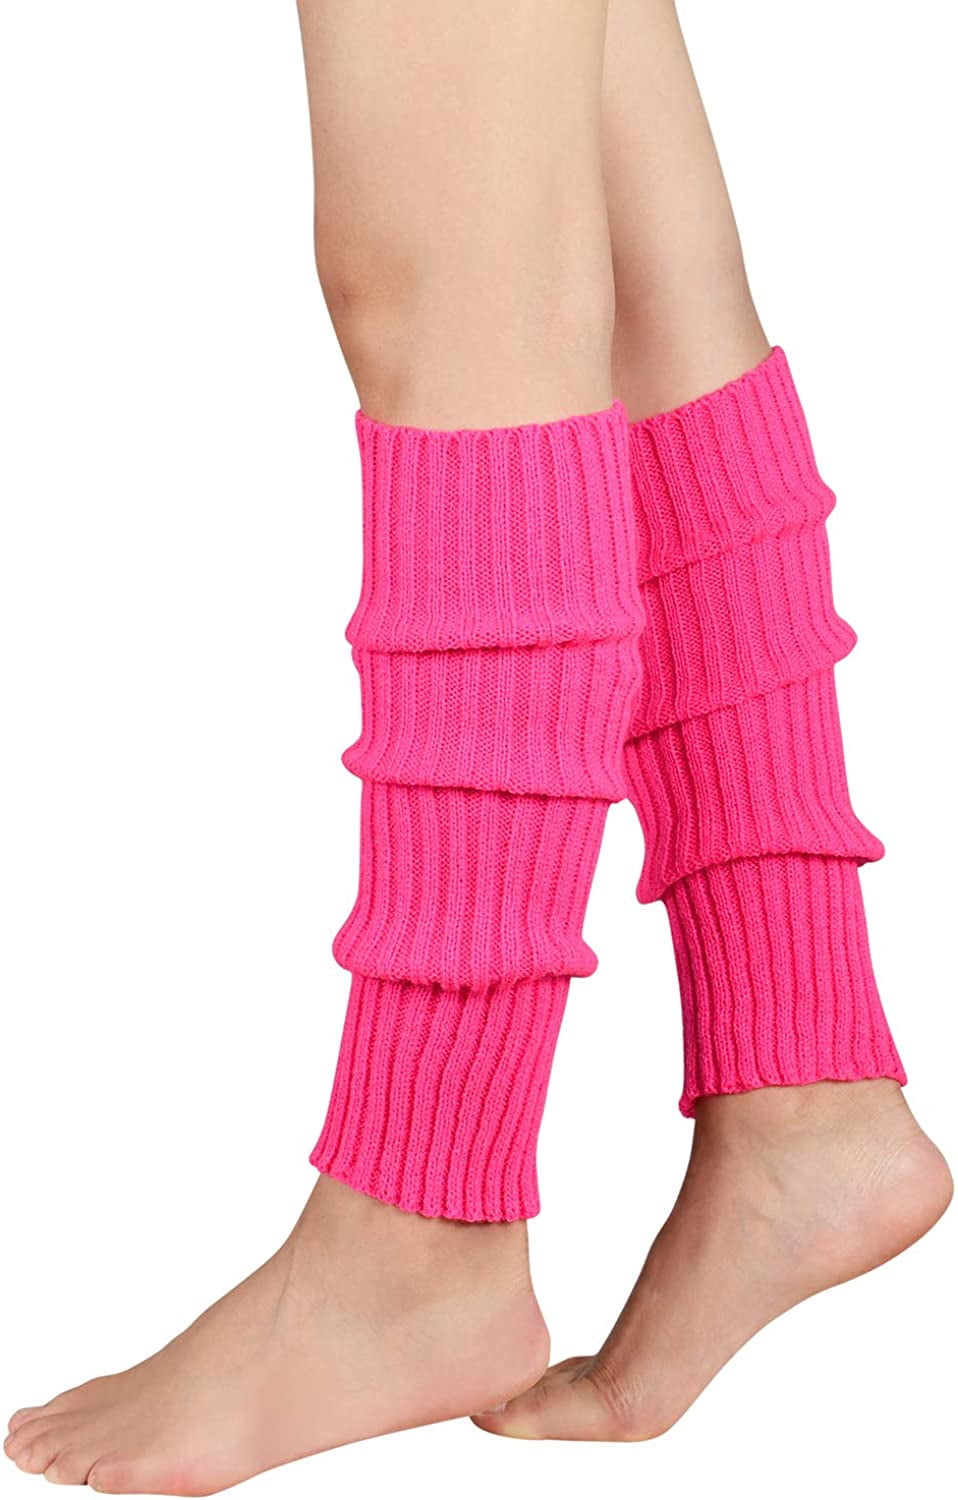 1980s Neon Legwarmers Dance Fancy Dress Ruched Top Leg Warmers 